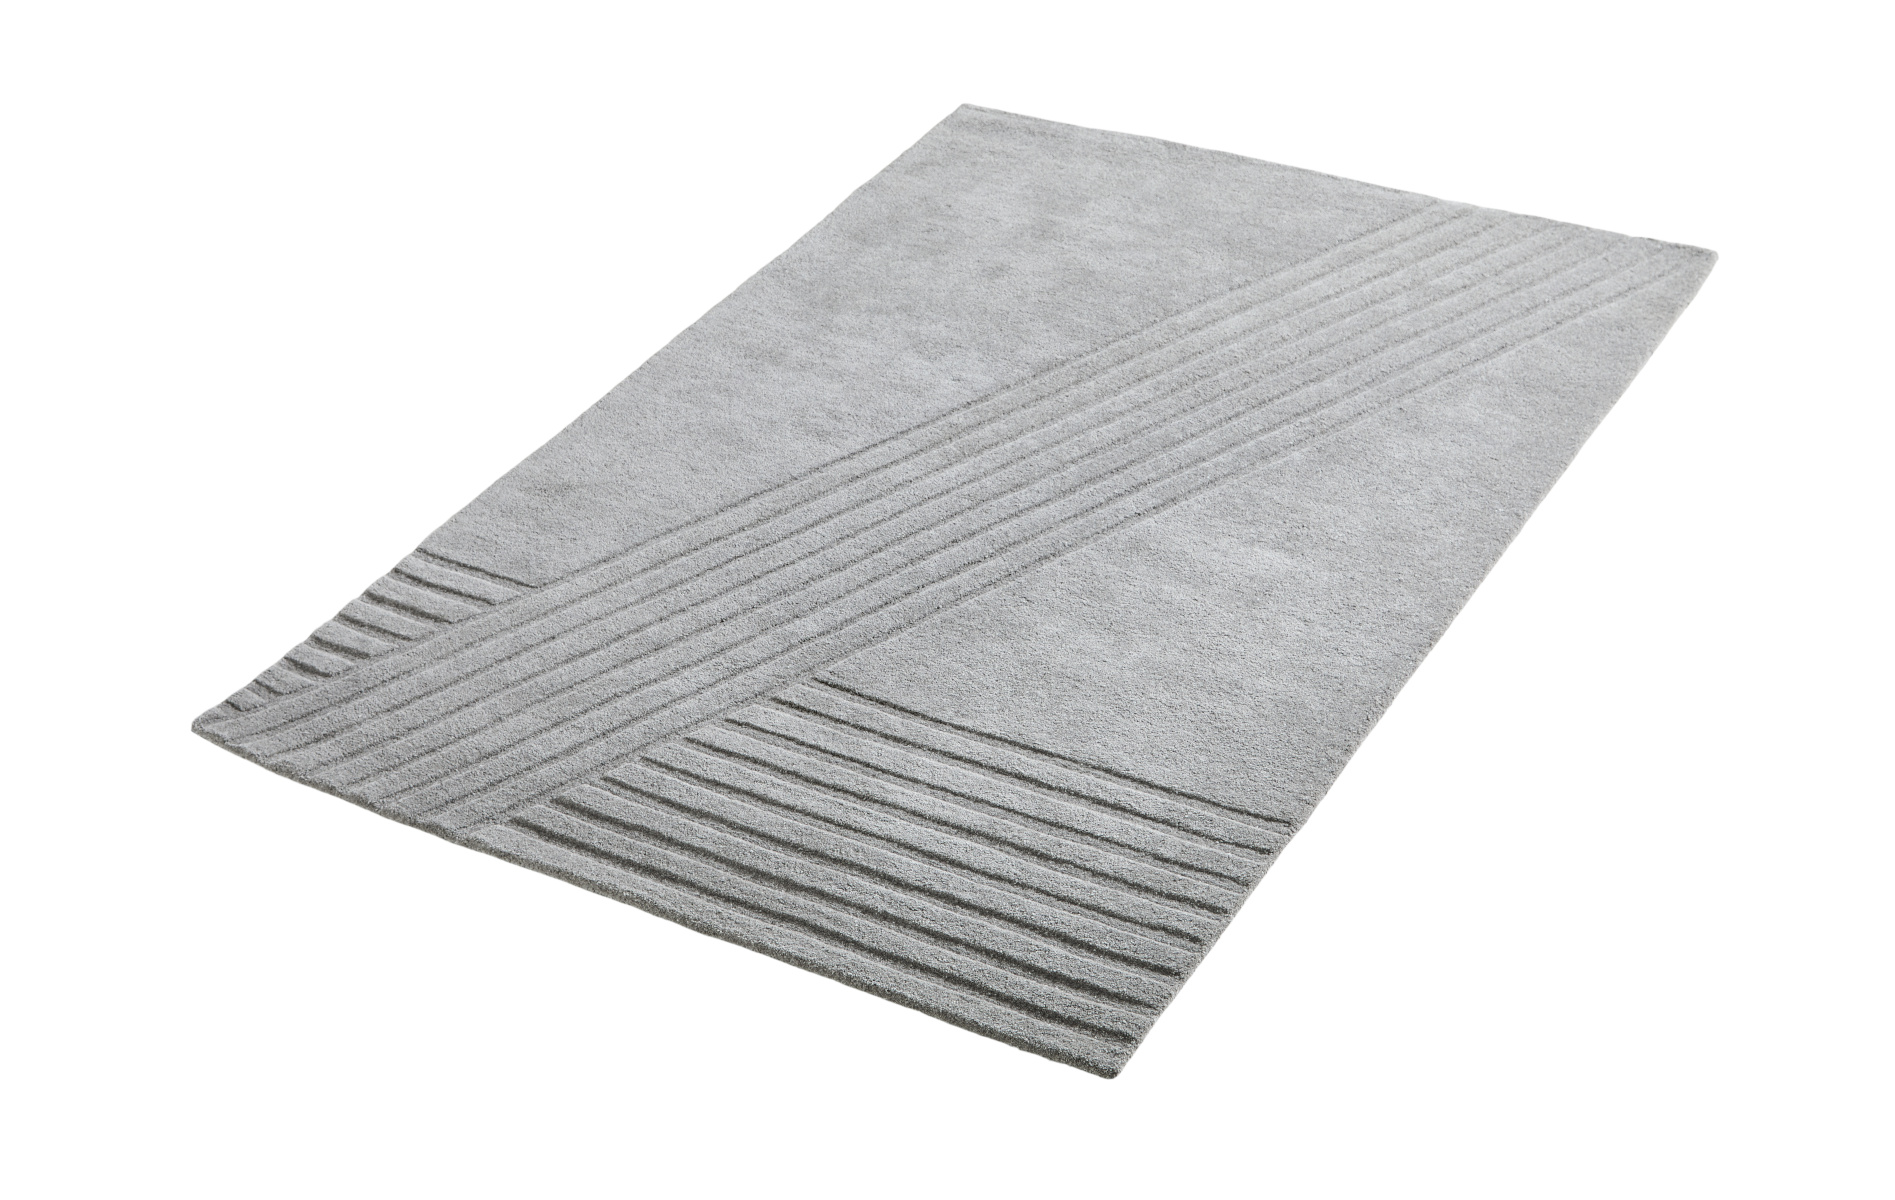 Kyoto Teppich, 90 x 140 cm, grey